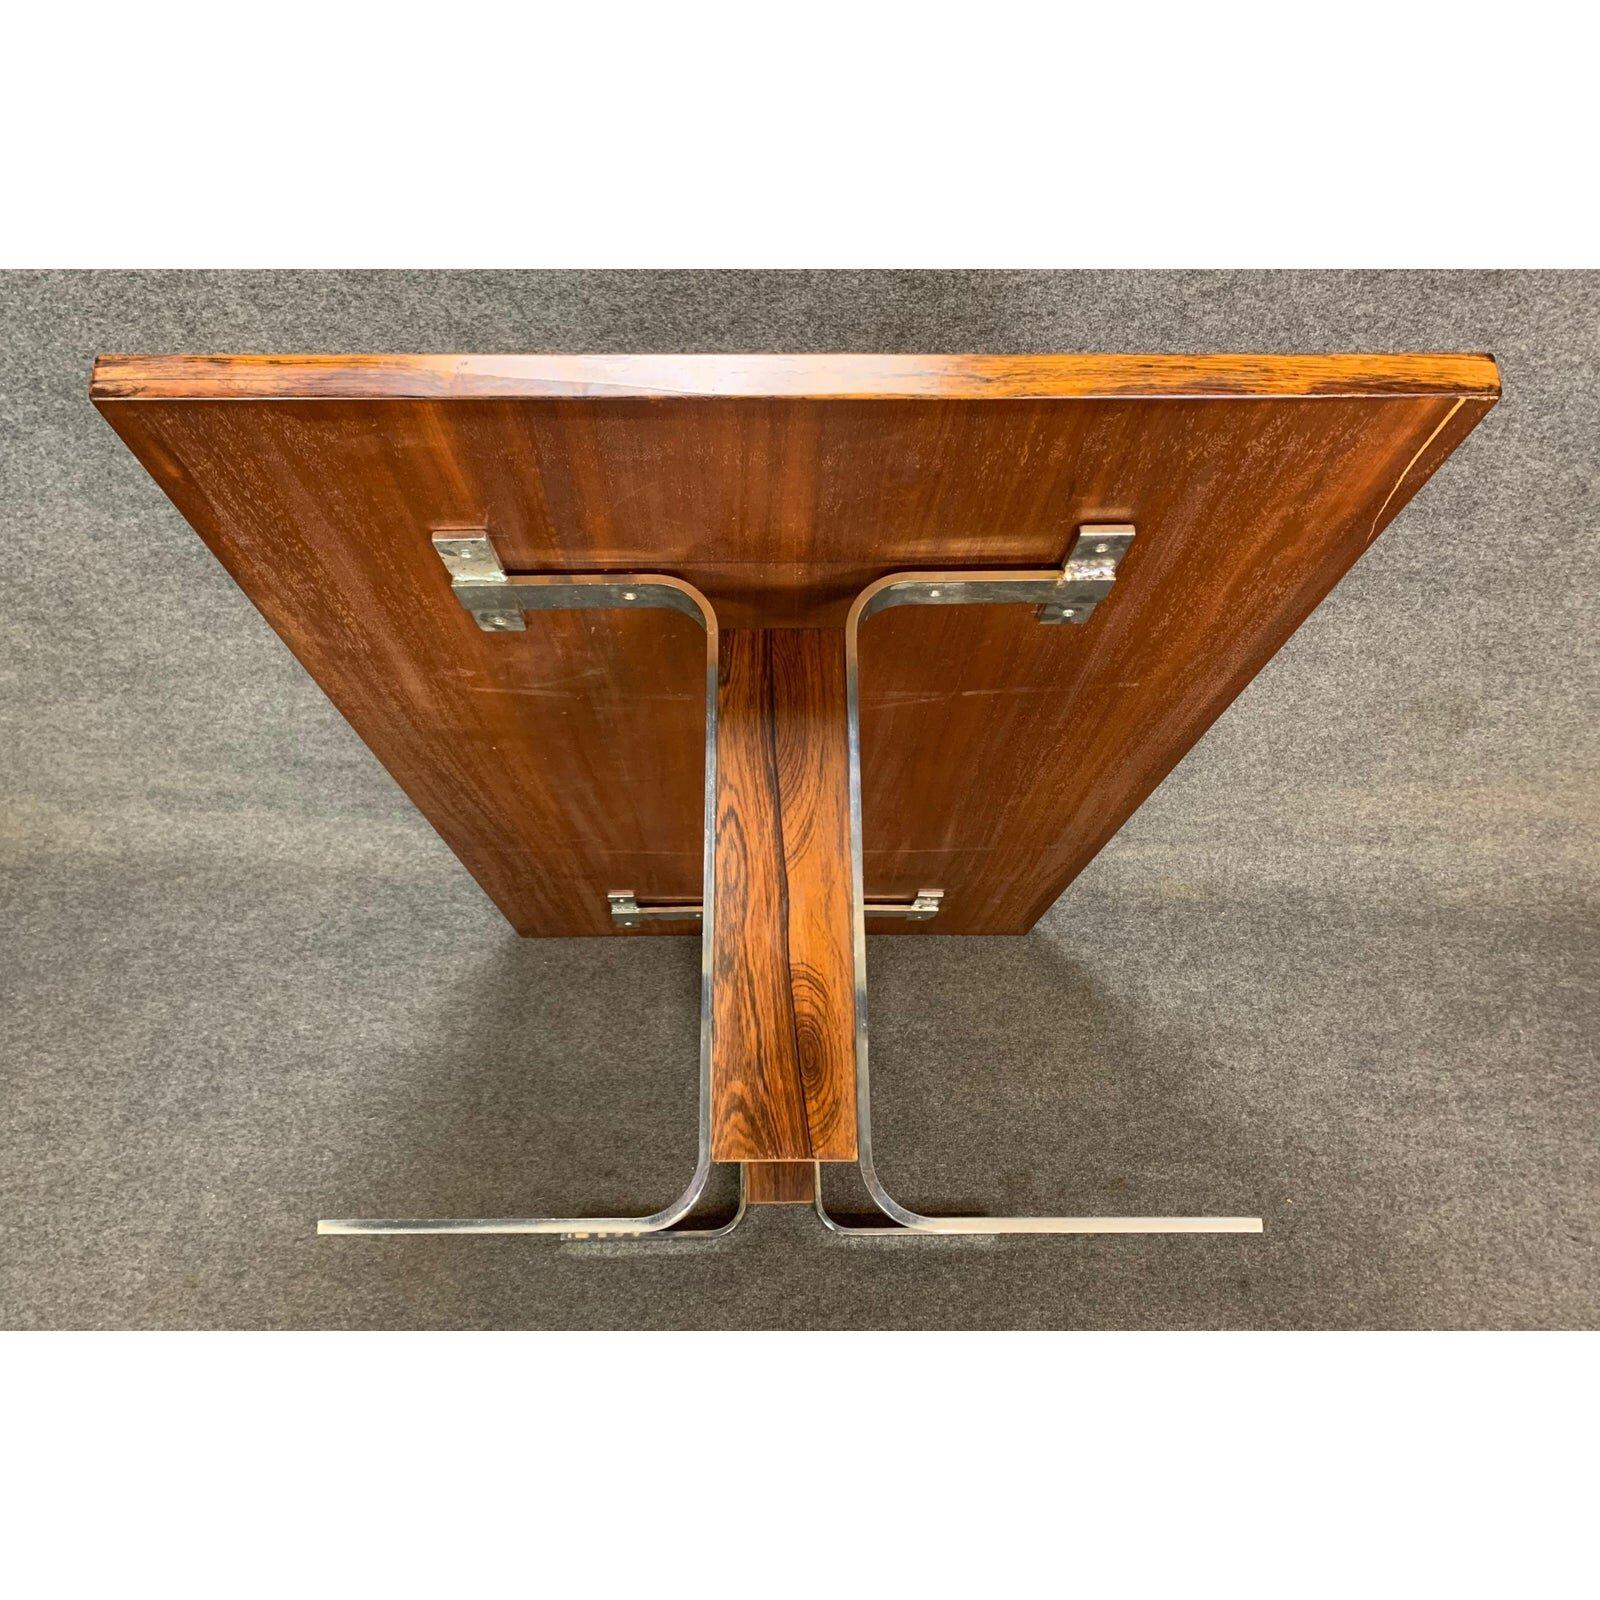 Scandinave moderne Grande table basse danoise vintage en bois de rose et chrome, moderne du milieu du siècle dernier en vente